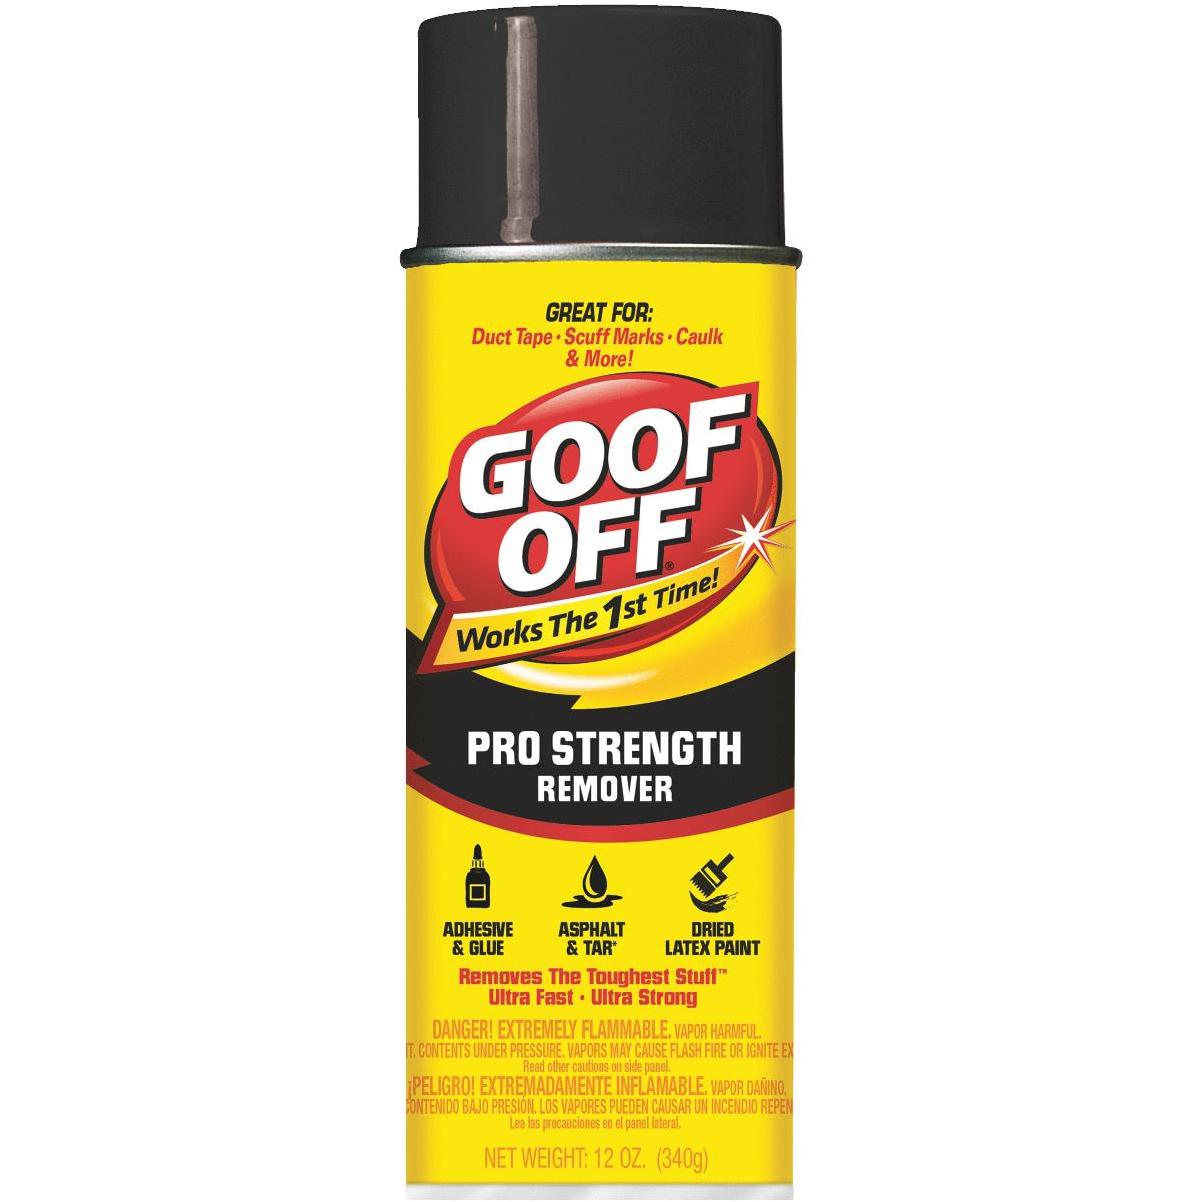 Goo Gone® - 12 oz Spray Gel